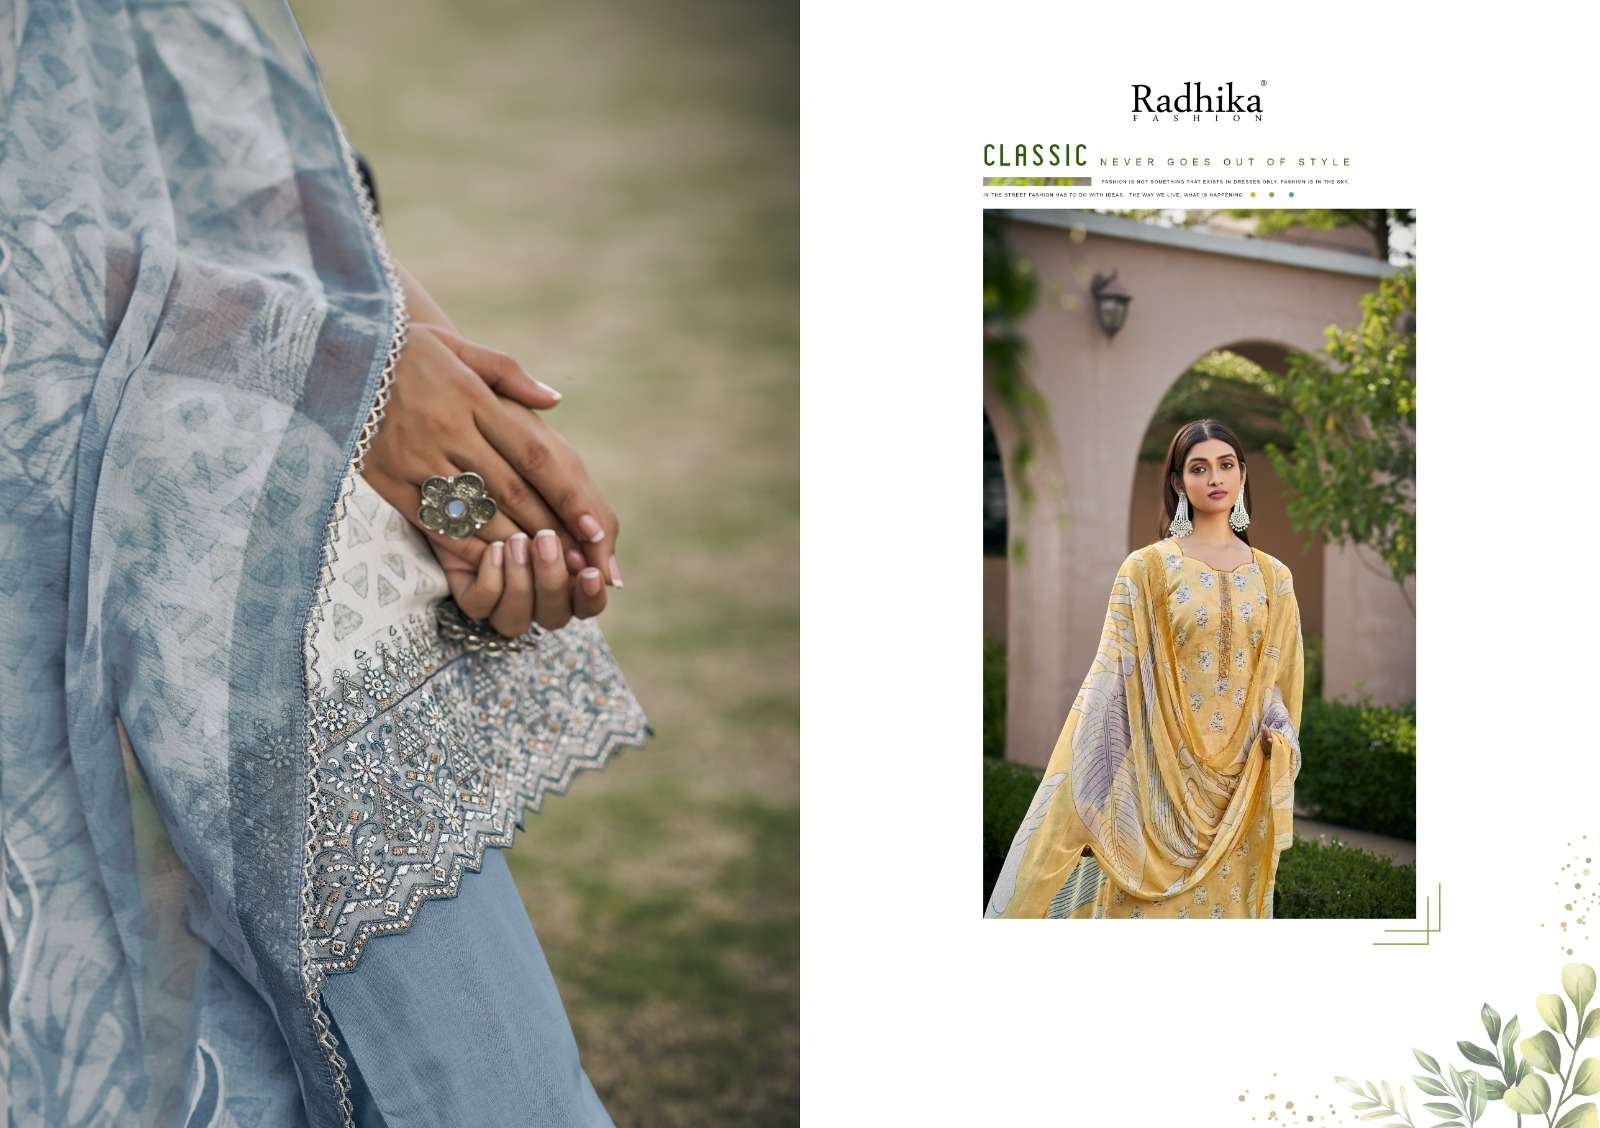 radhika fashion naira 61001-61006 series unstitced designer salwar kameez catalogue wholesaler surat